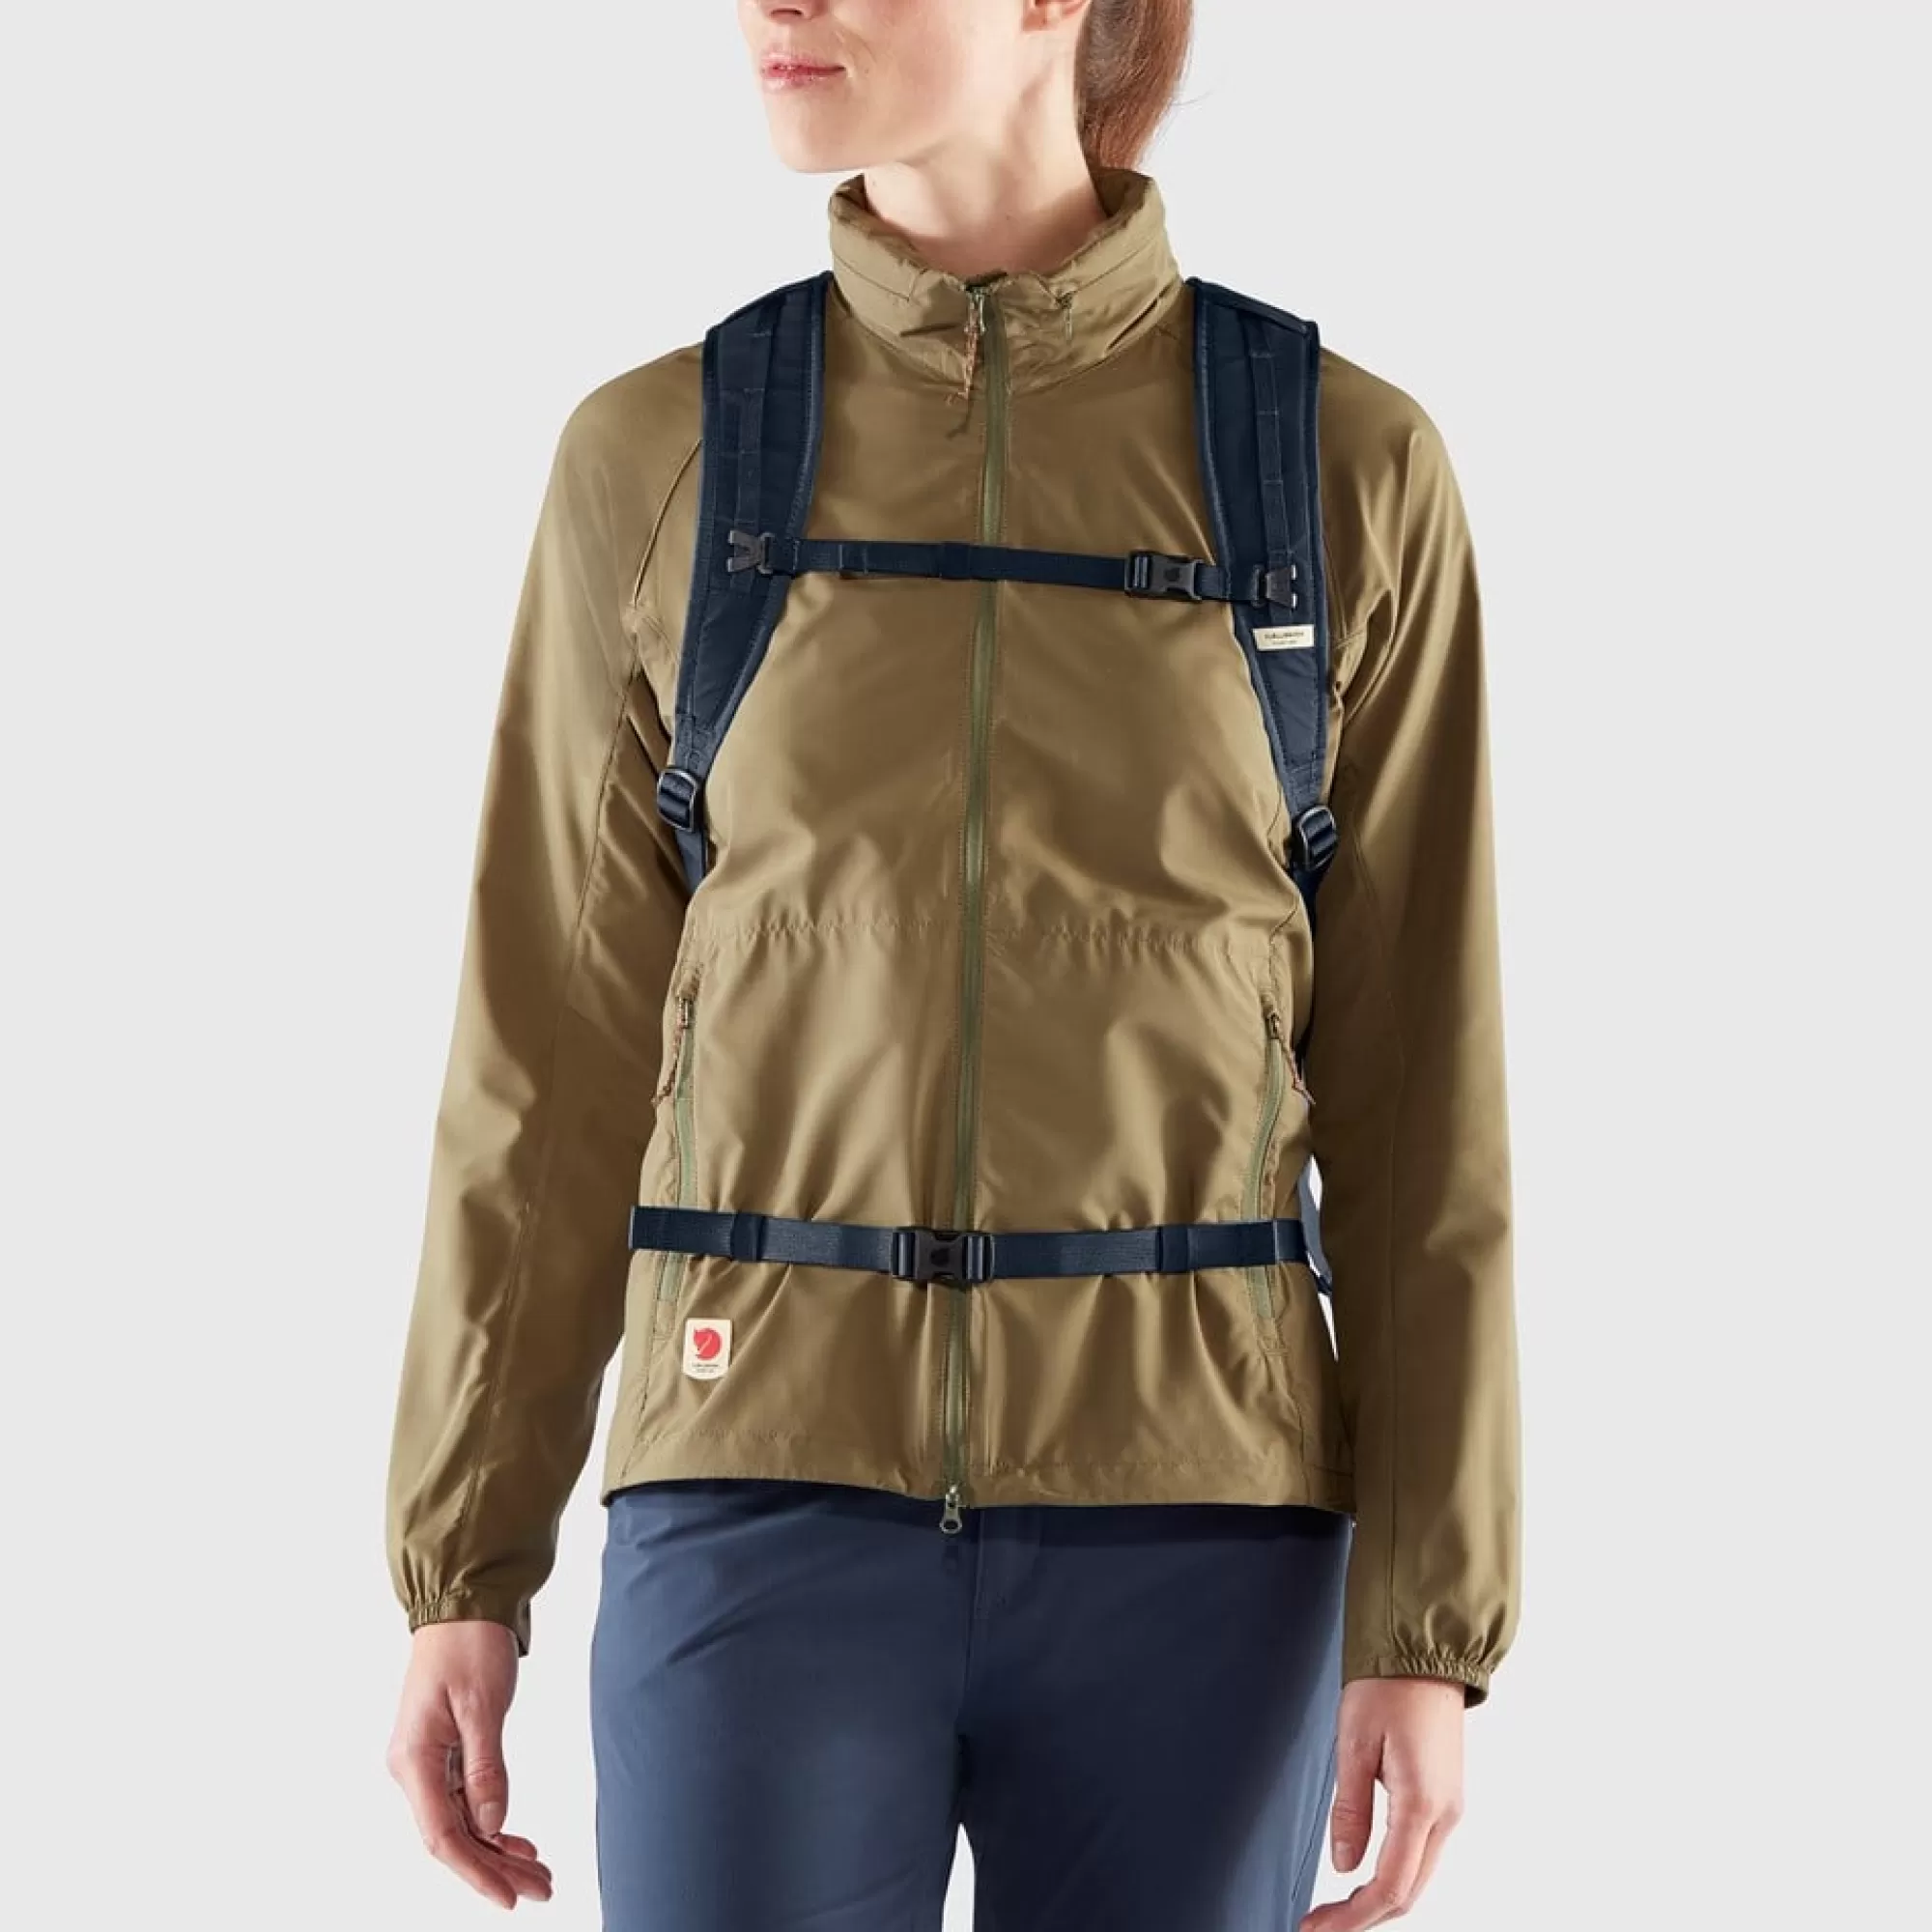 Backpacks & bags*WOMEN Fjallraven High Coast Foldsack 24 Green